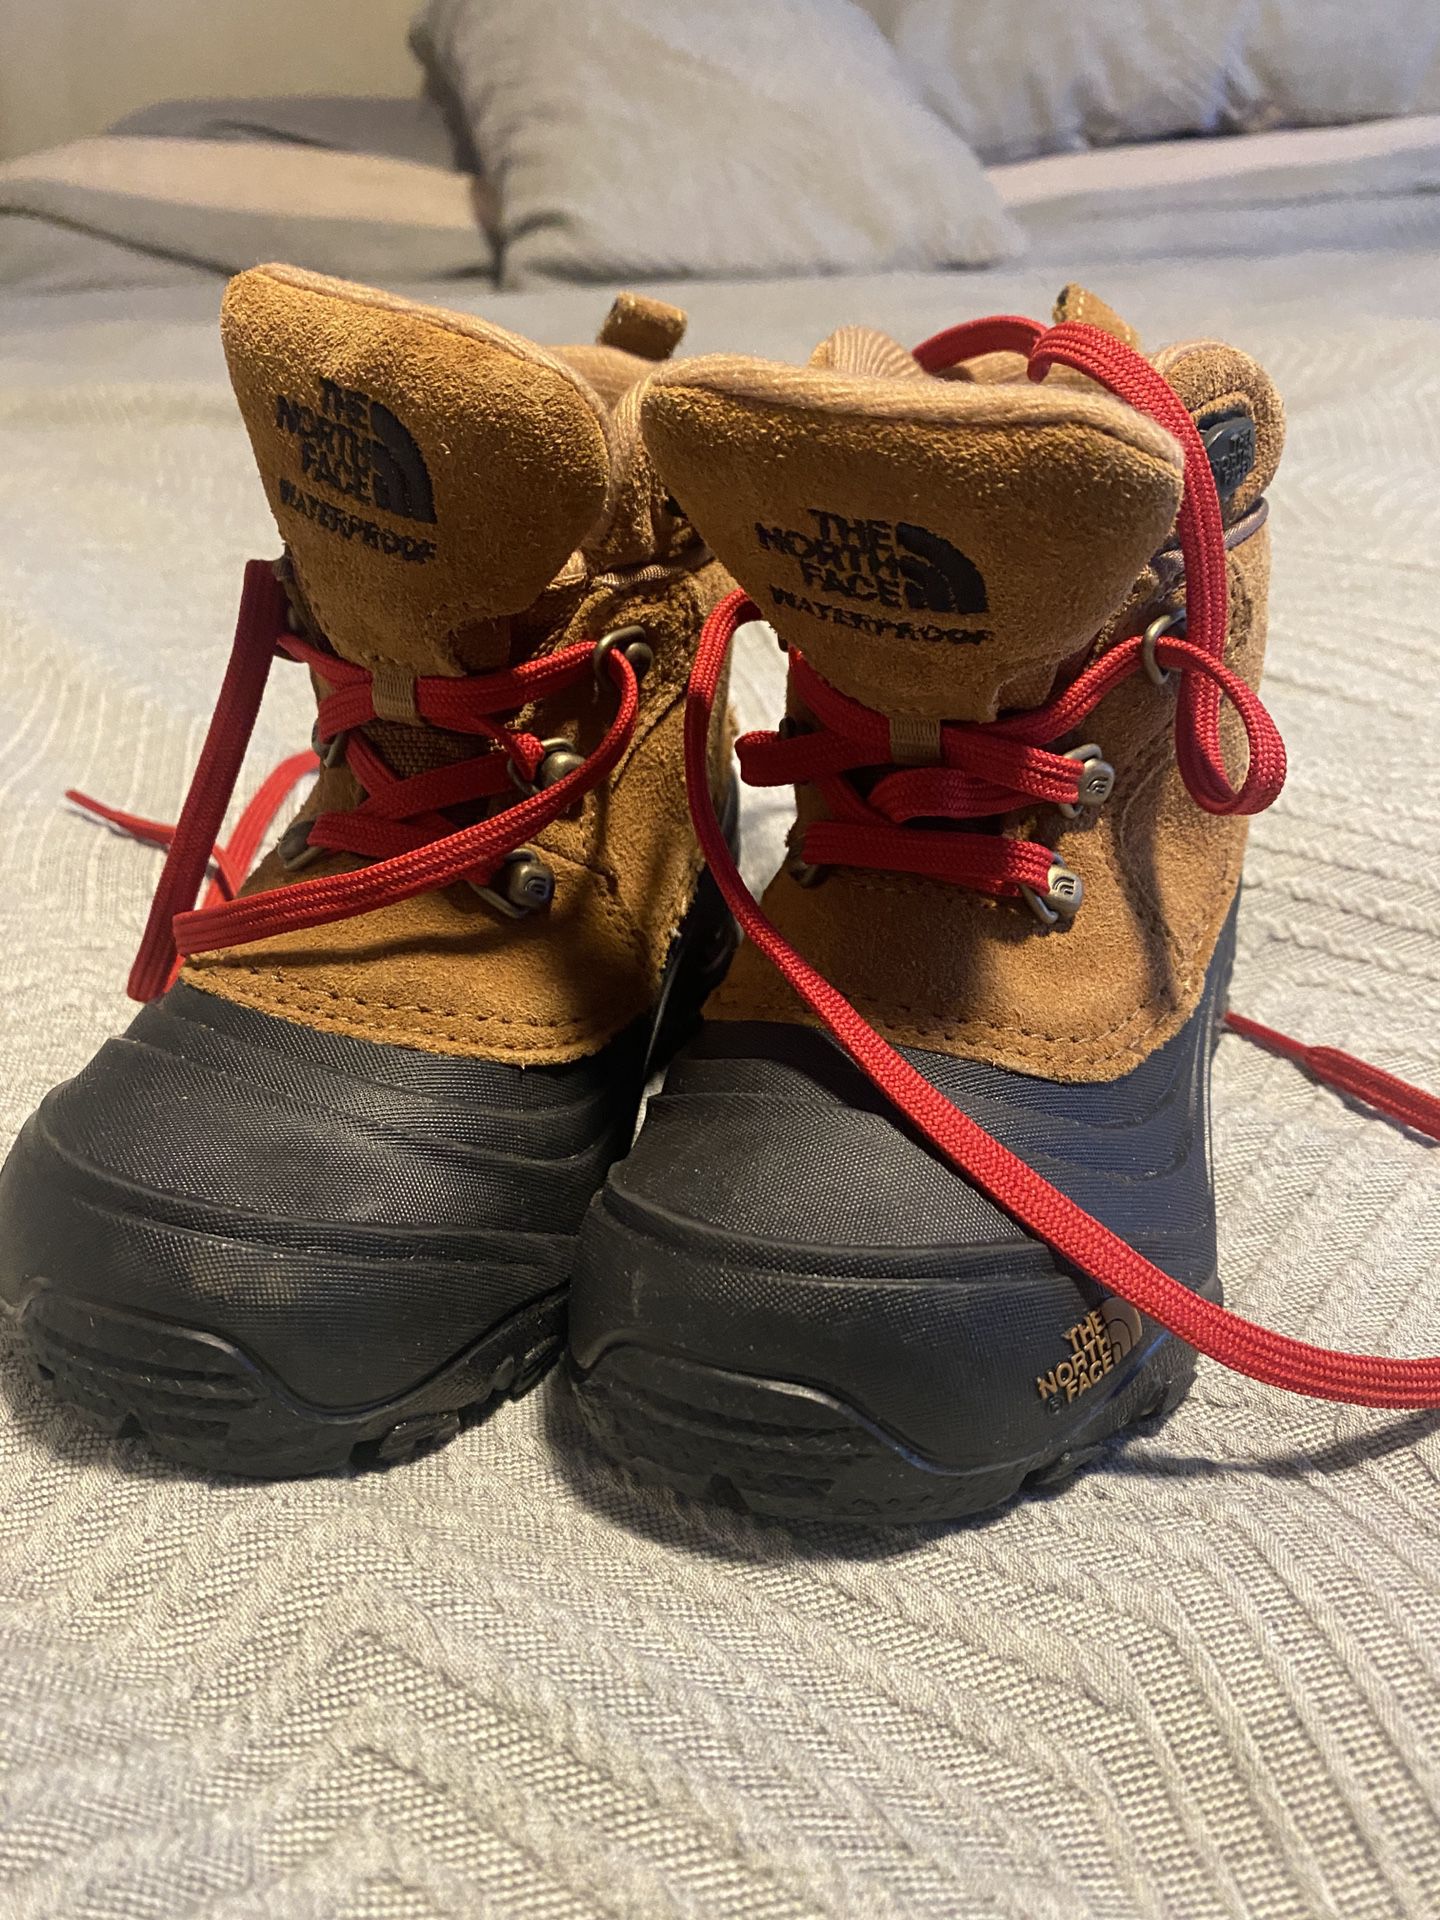 Northface Boys Snow Boots Size 11